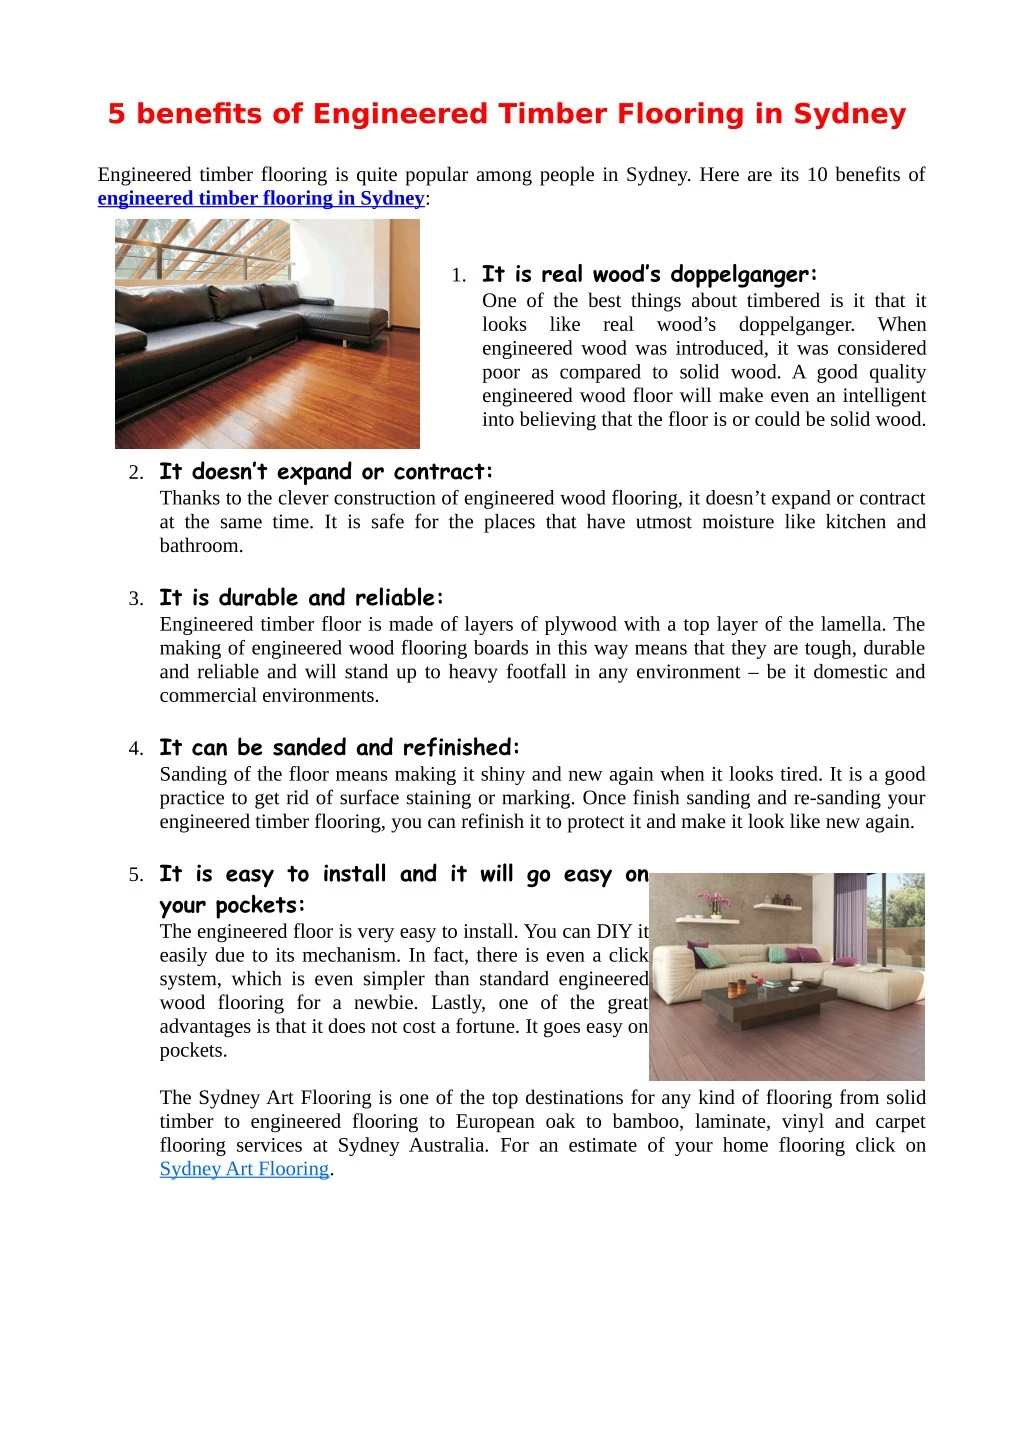 5 benefits of engineered timber flooring in sydney